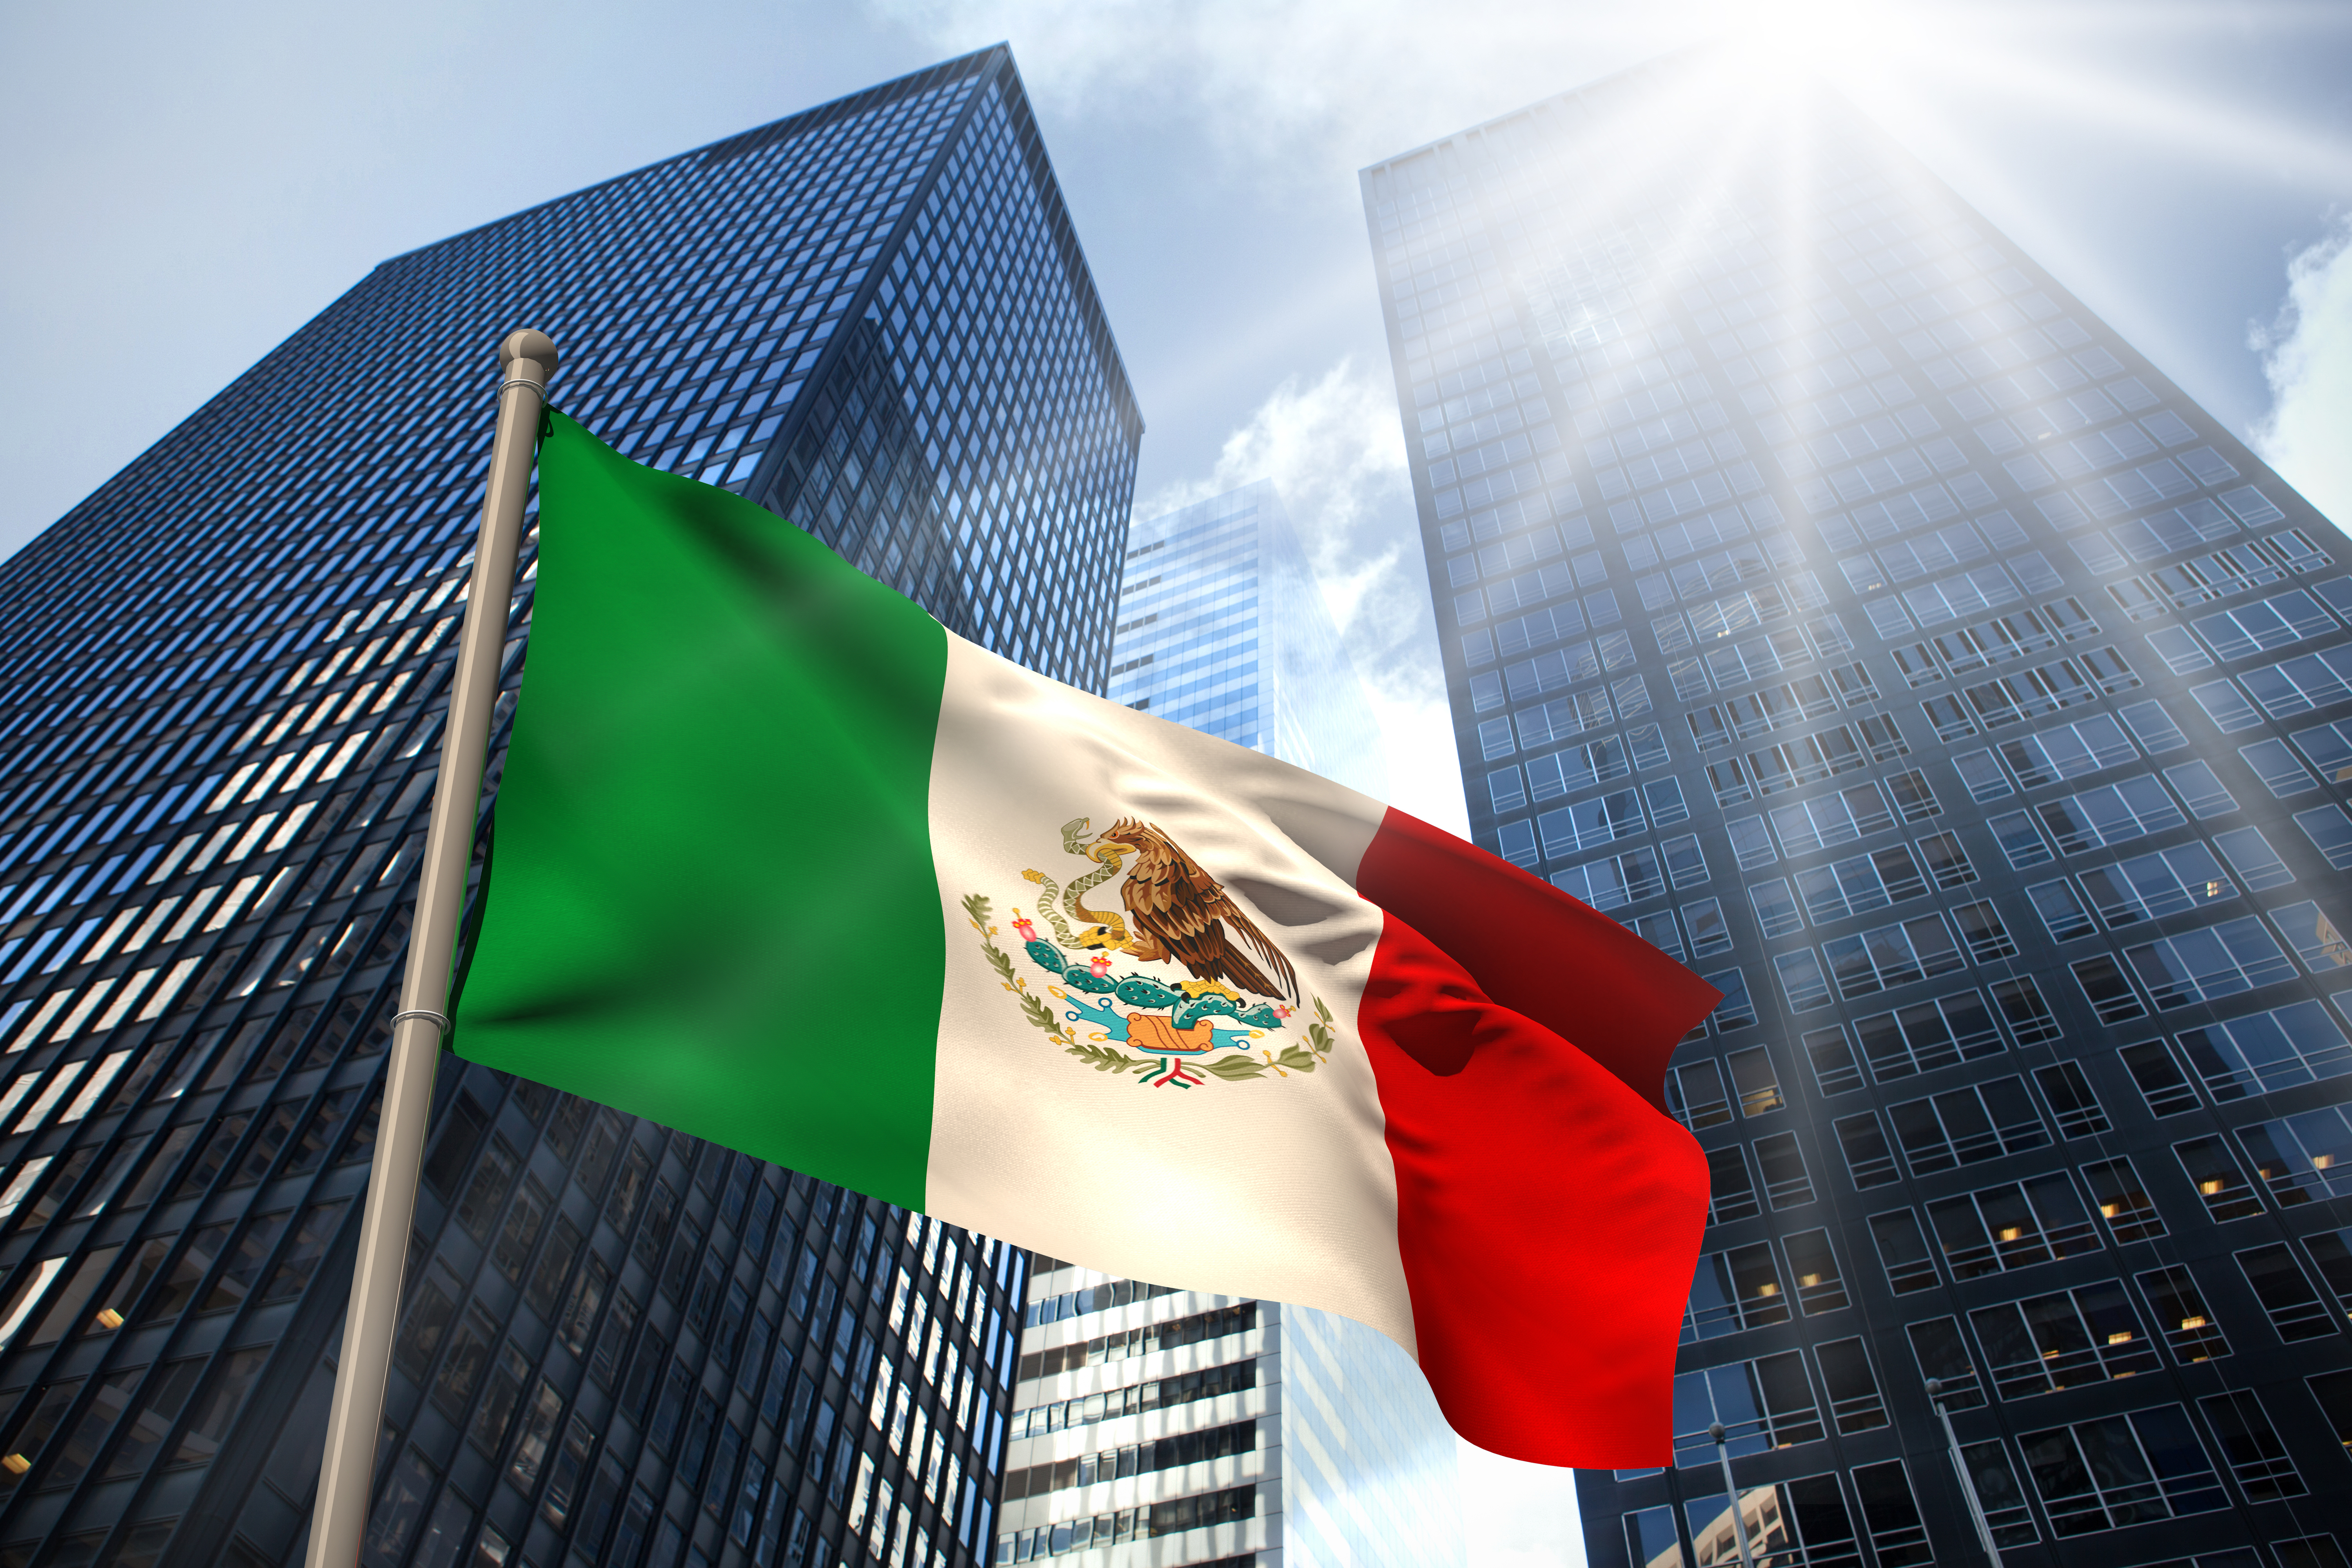 The flag symbolizes the citizenship of Mexico